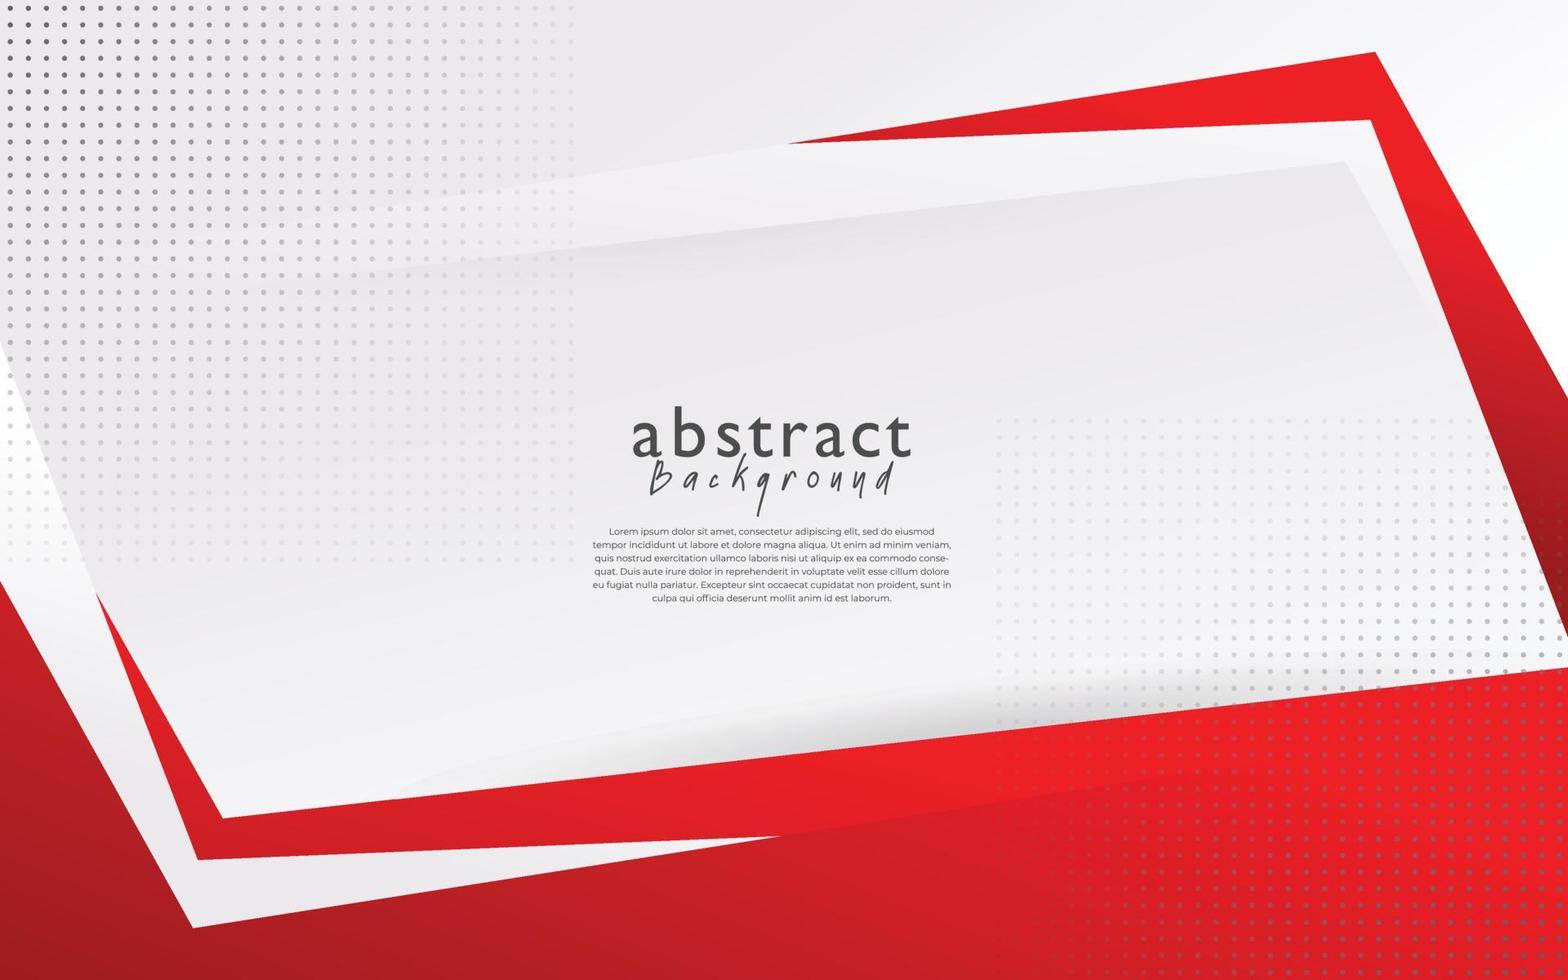 diseño de fondo abstracto moderno blanco rojo vector